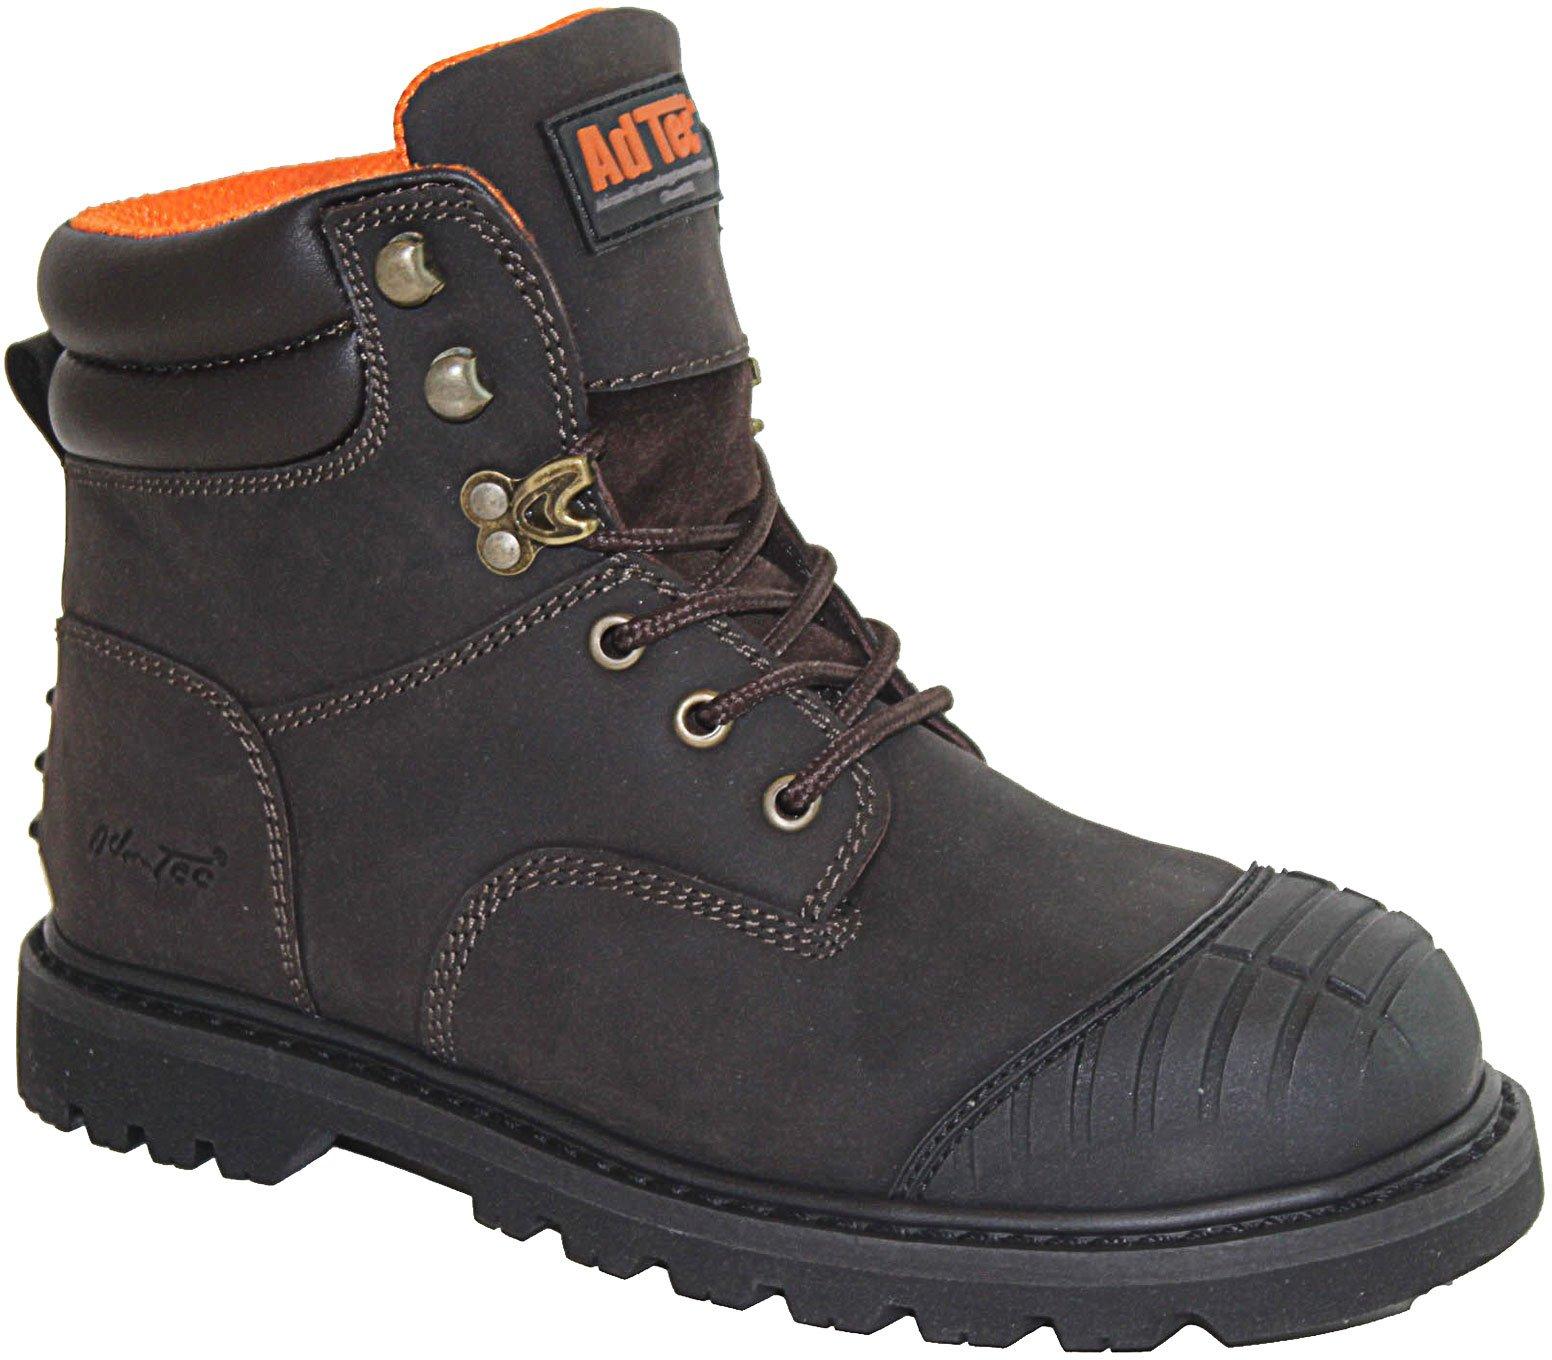 AdTec Mens 6'' Steel Toe Work Boots